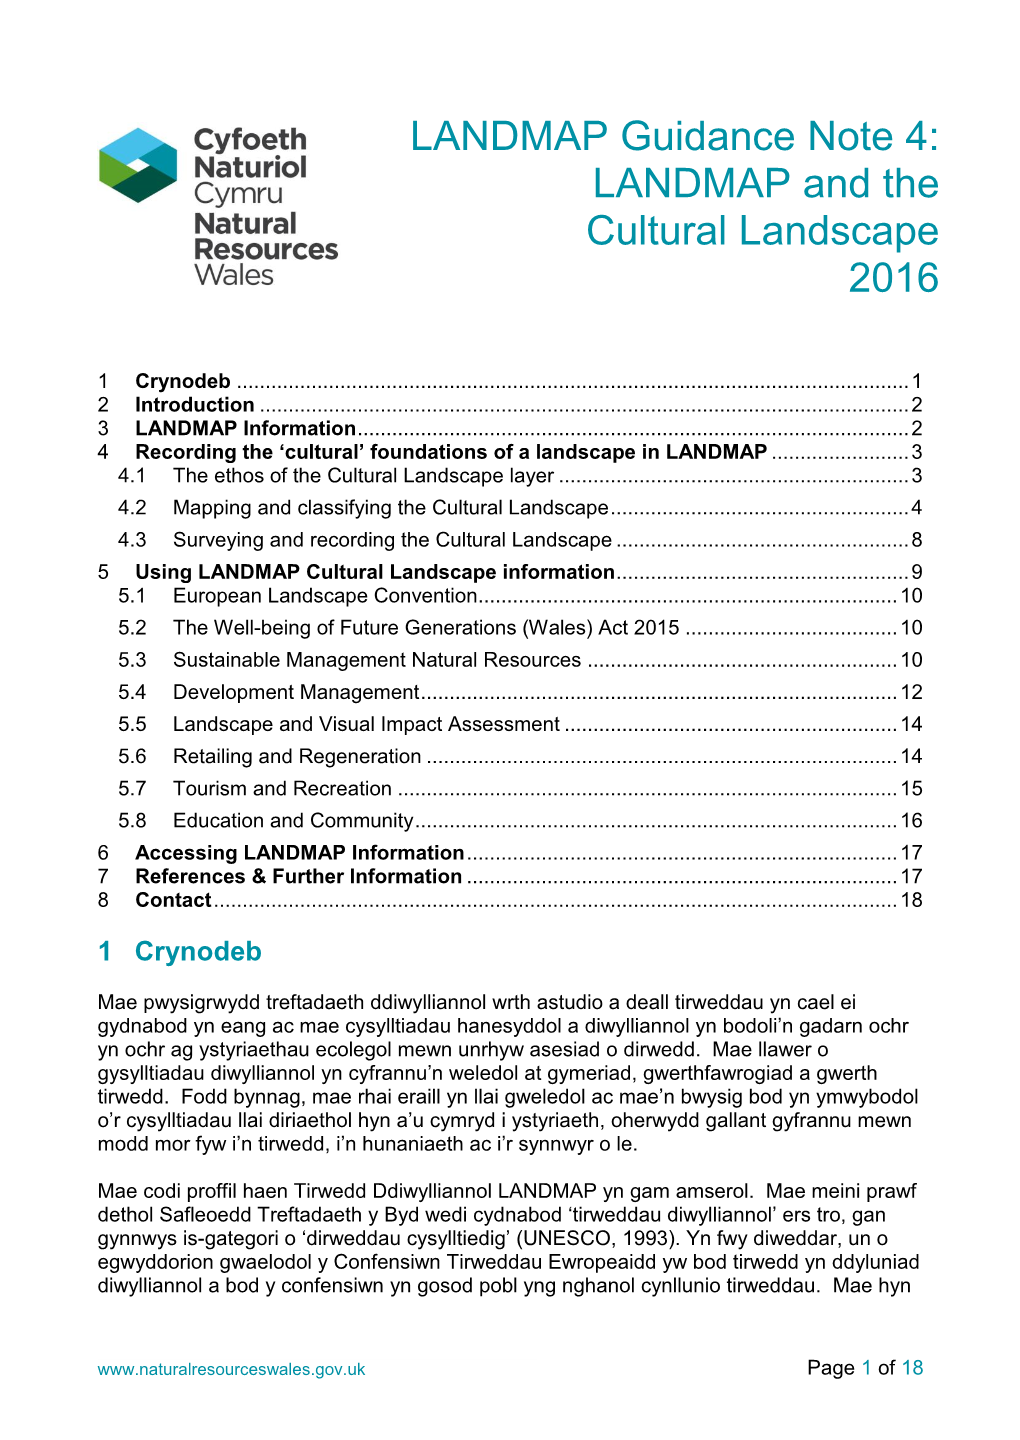 GN4 LANDMAP and the Cultural Landscape